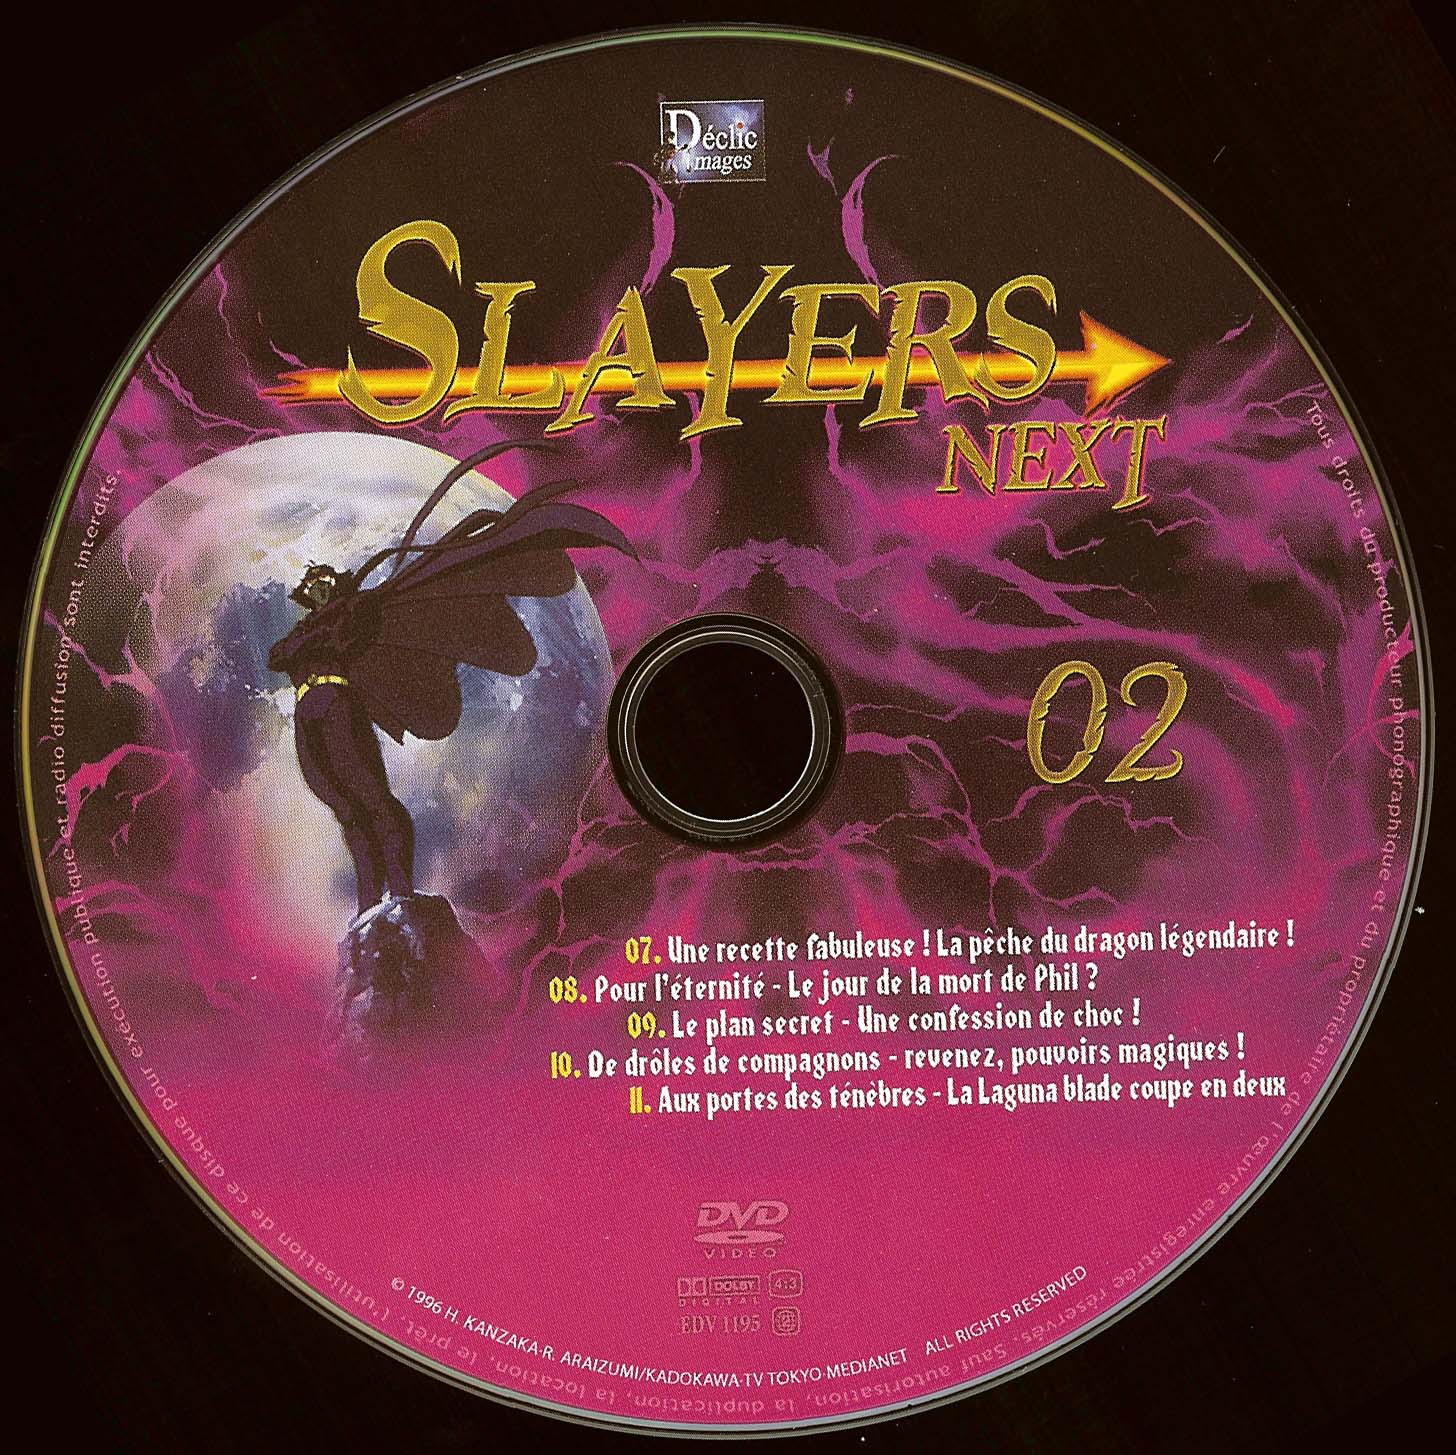 Slayers next DISC 2